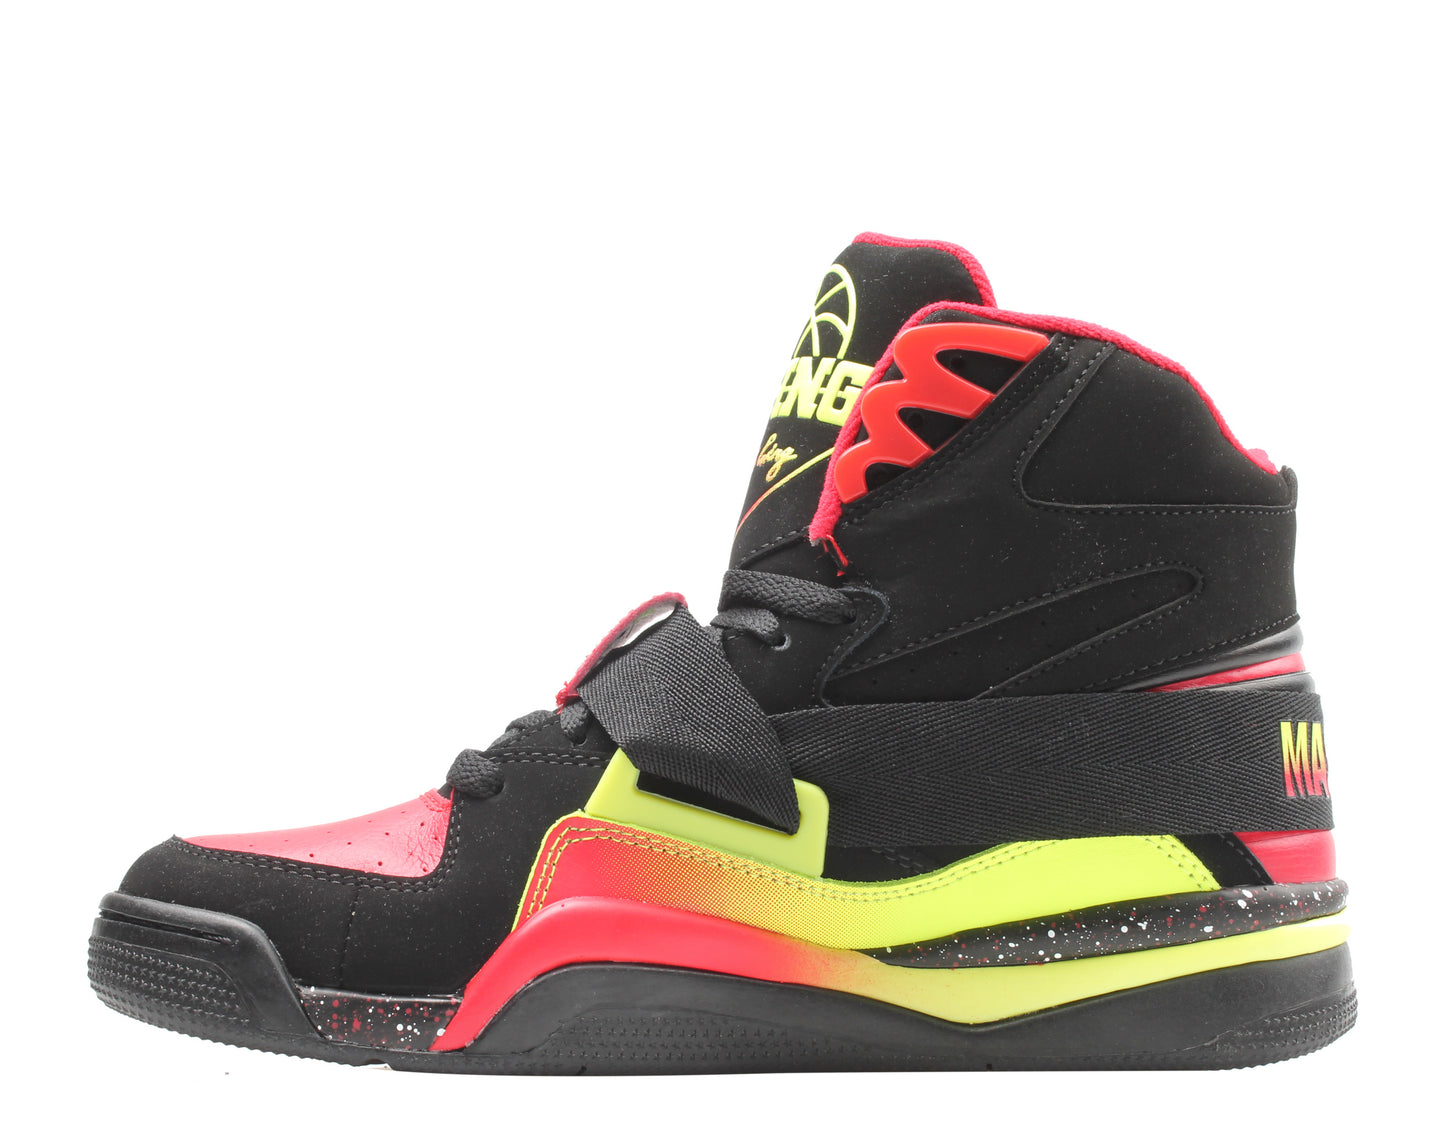 Ewing Athletics Ewing Concept x Anthony Mason Basketball Shoes 1BM00766-033